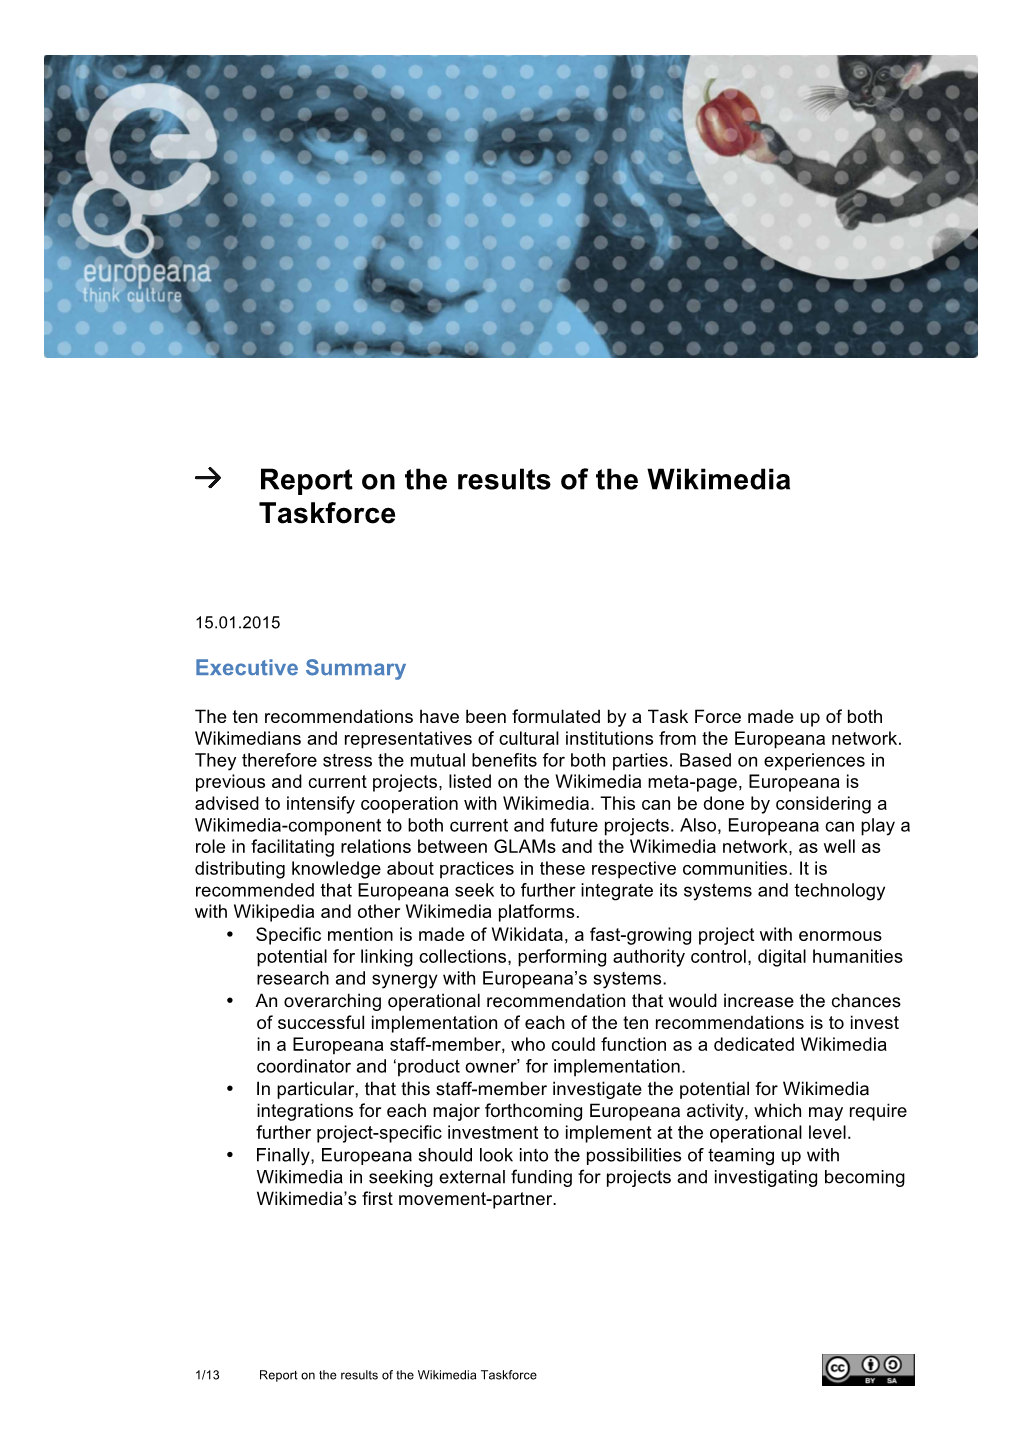 Europeana Wikimedia Task Force Recommendations, 2015